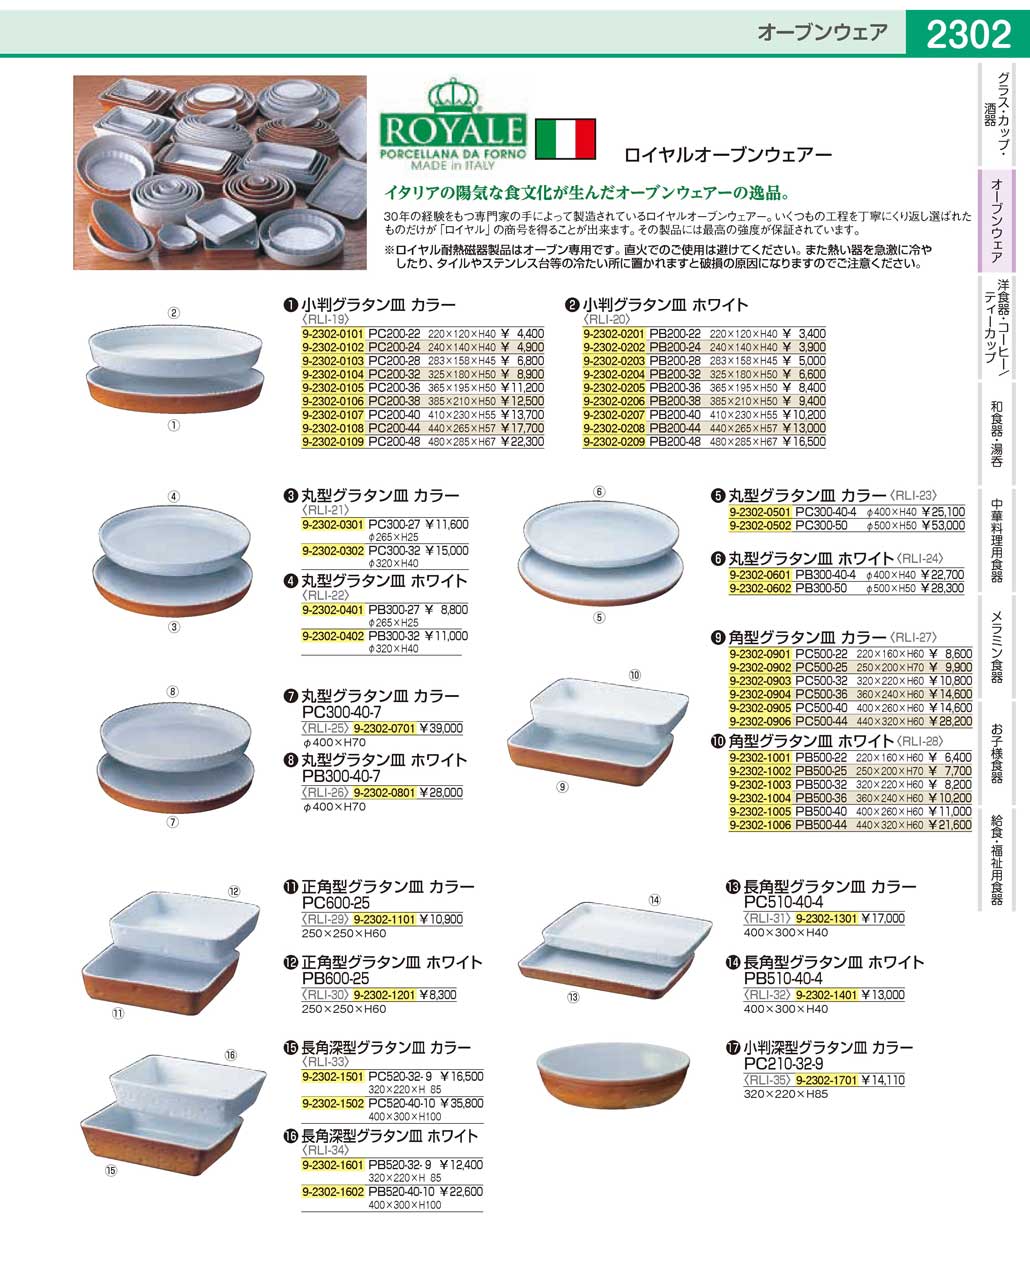 RLI2006(90)ロイヤル 小判グラタン皿 ホワイトＰＢ２００-３８（商品